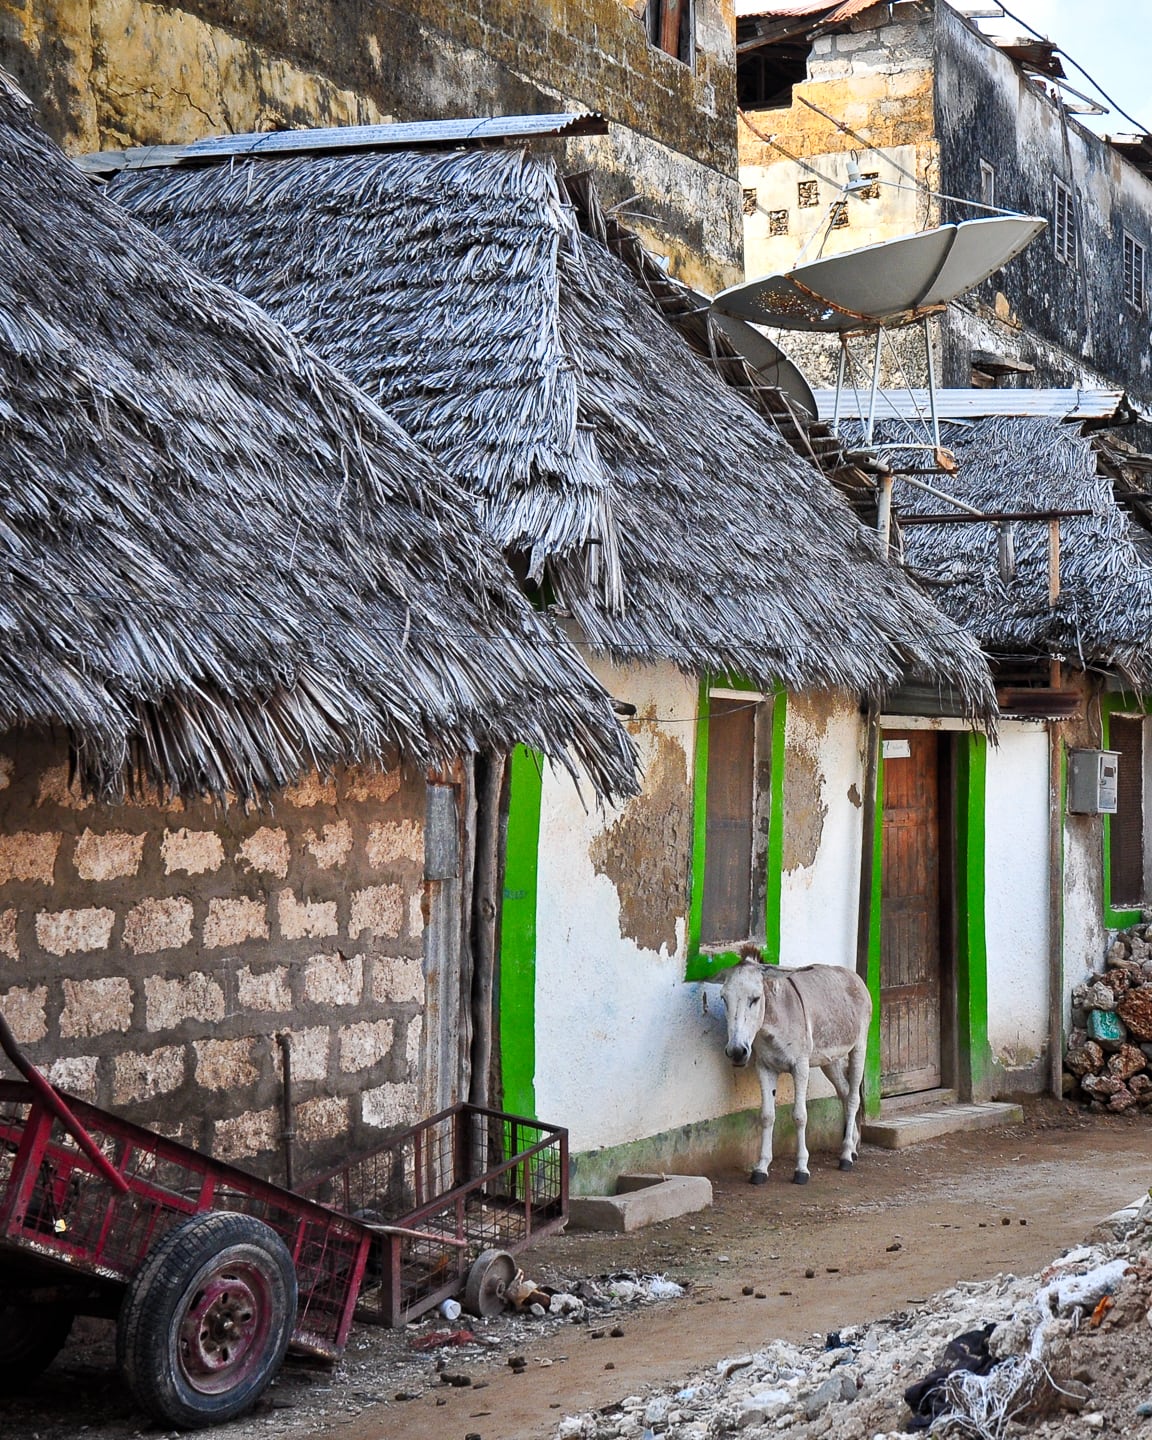 mule in front of thatch roof house Lamu Kenya